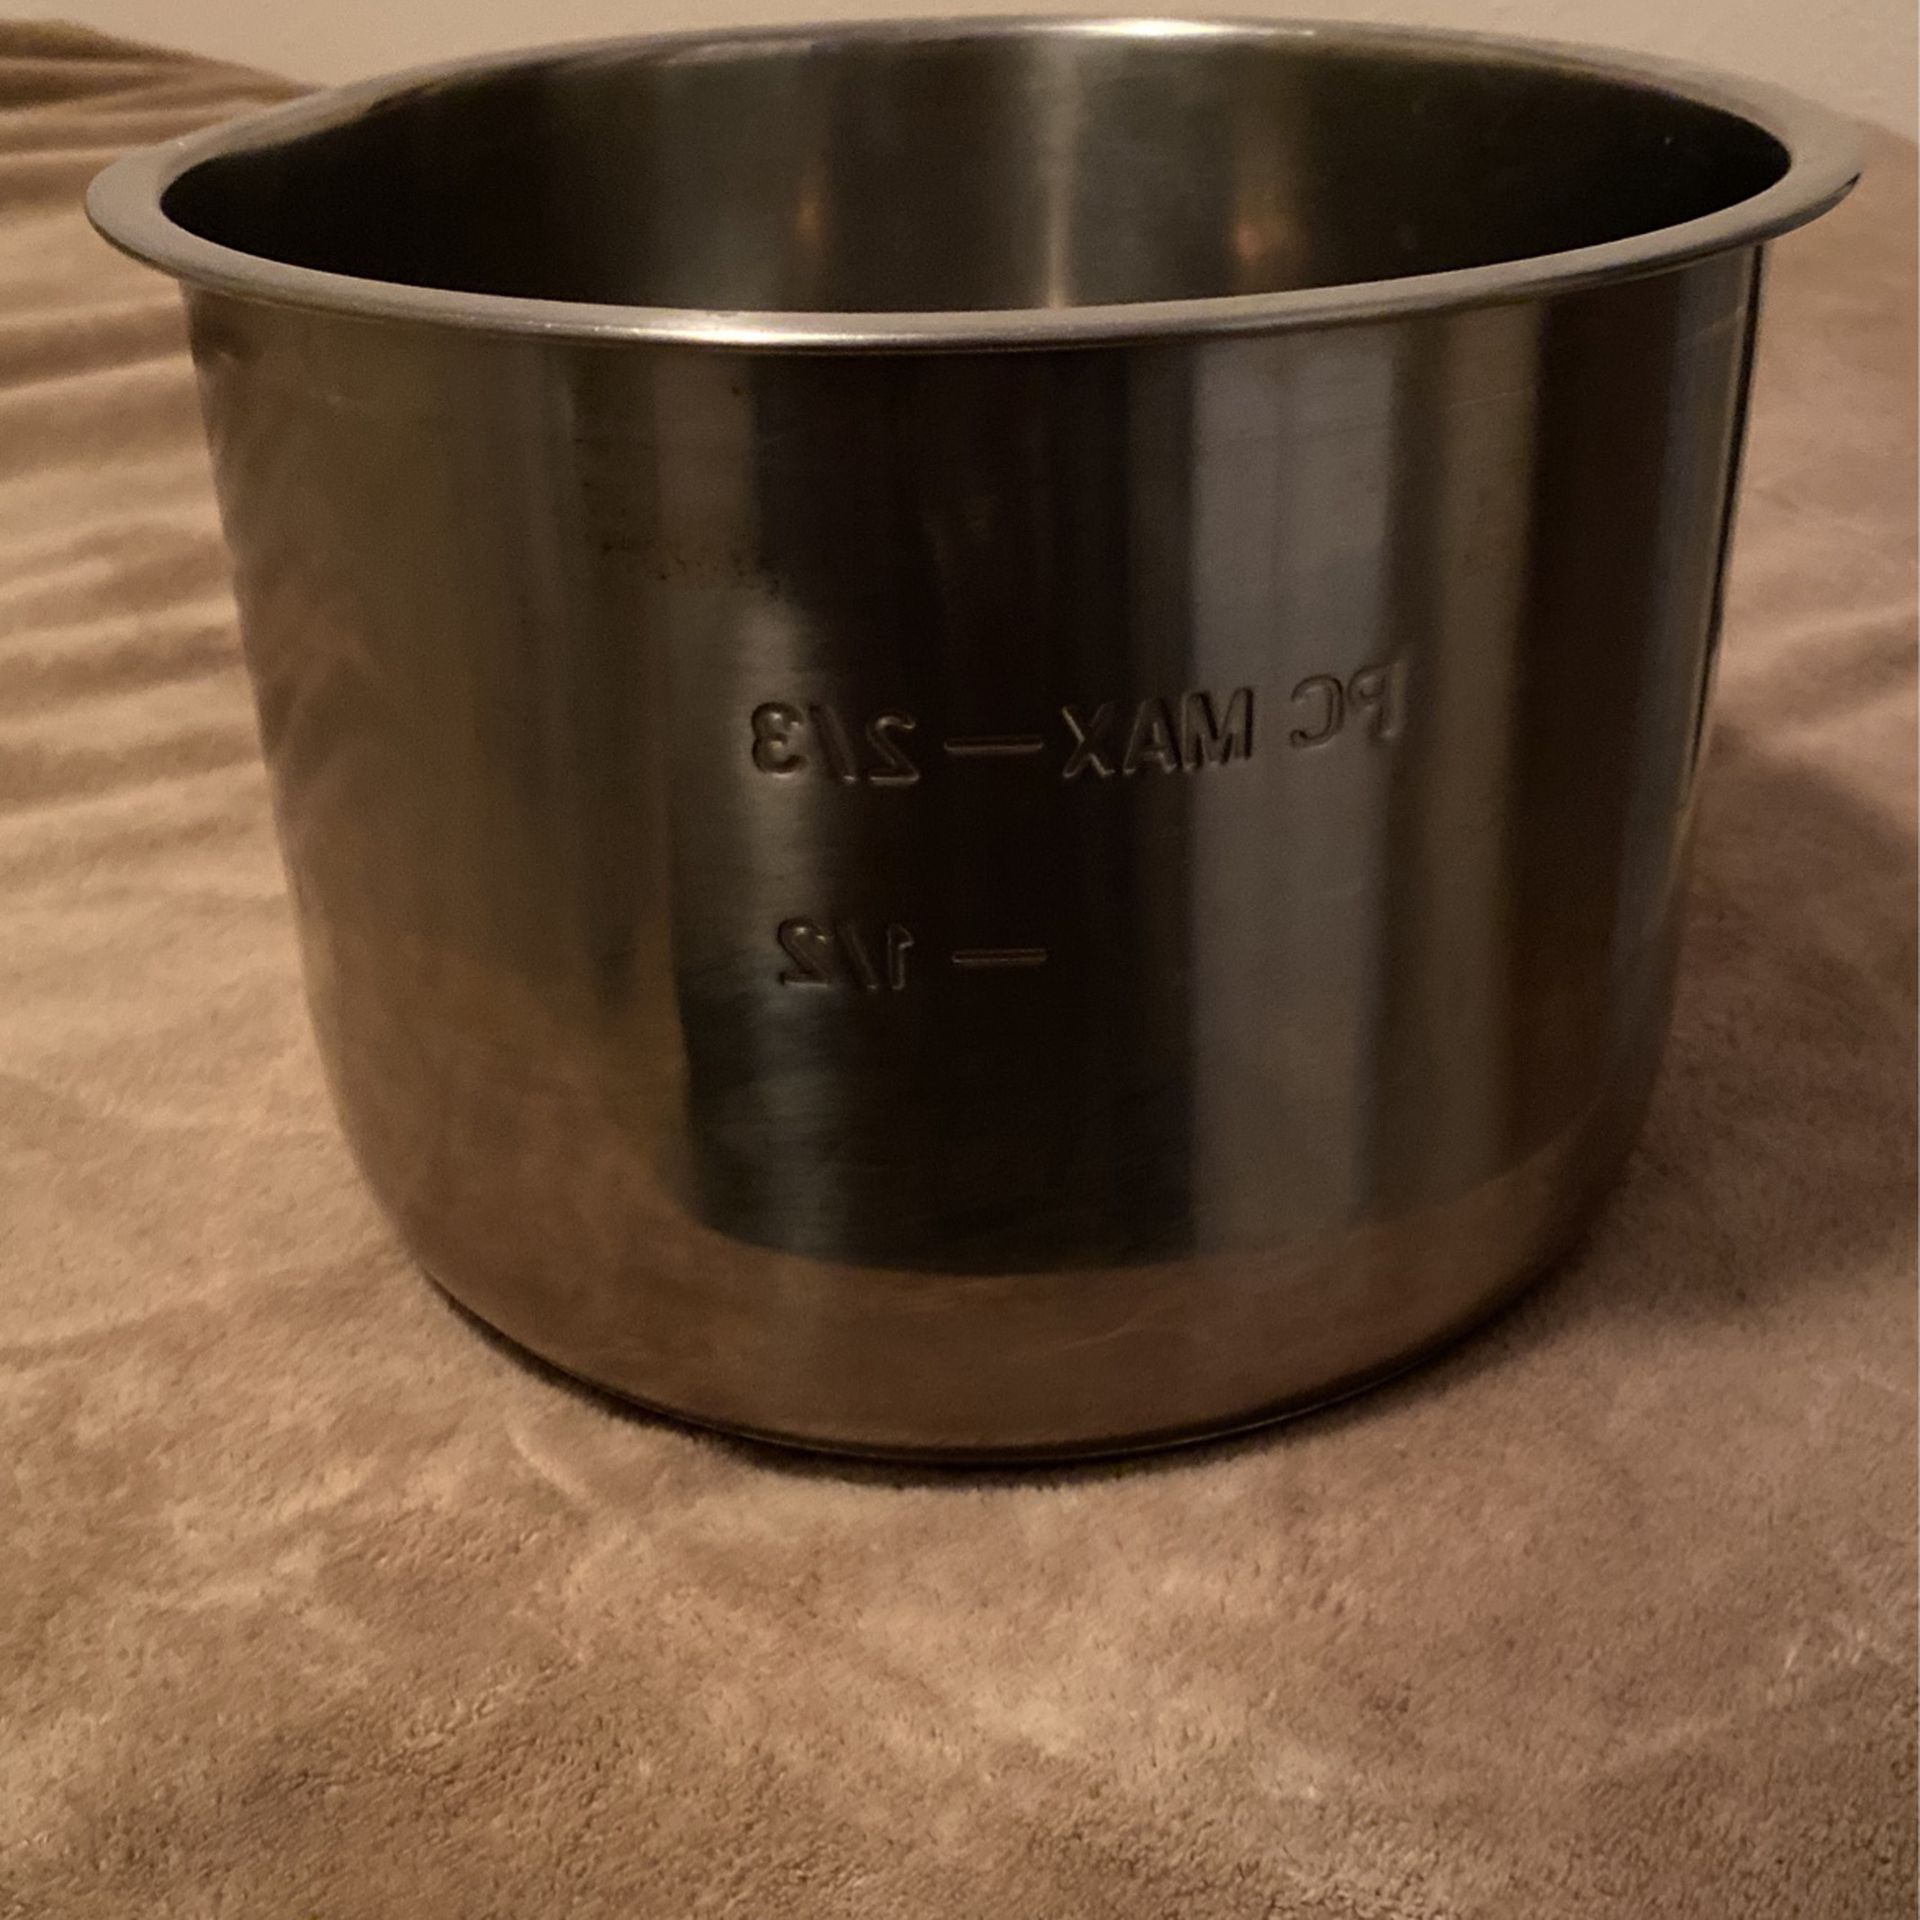 Instant Pot genuine Inner stainless steel Pot for duo crisp AF 8 Pressure cooker air fryer